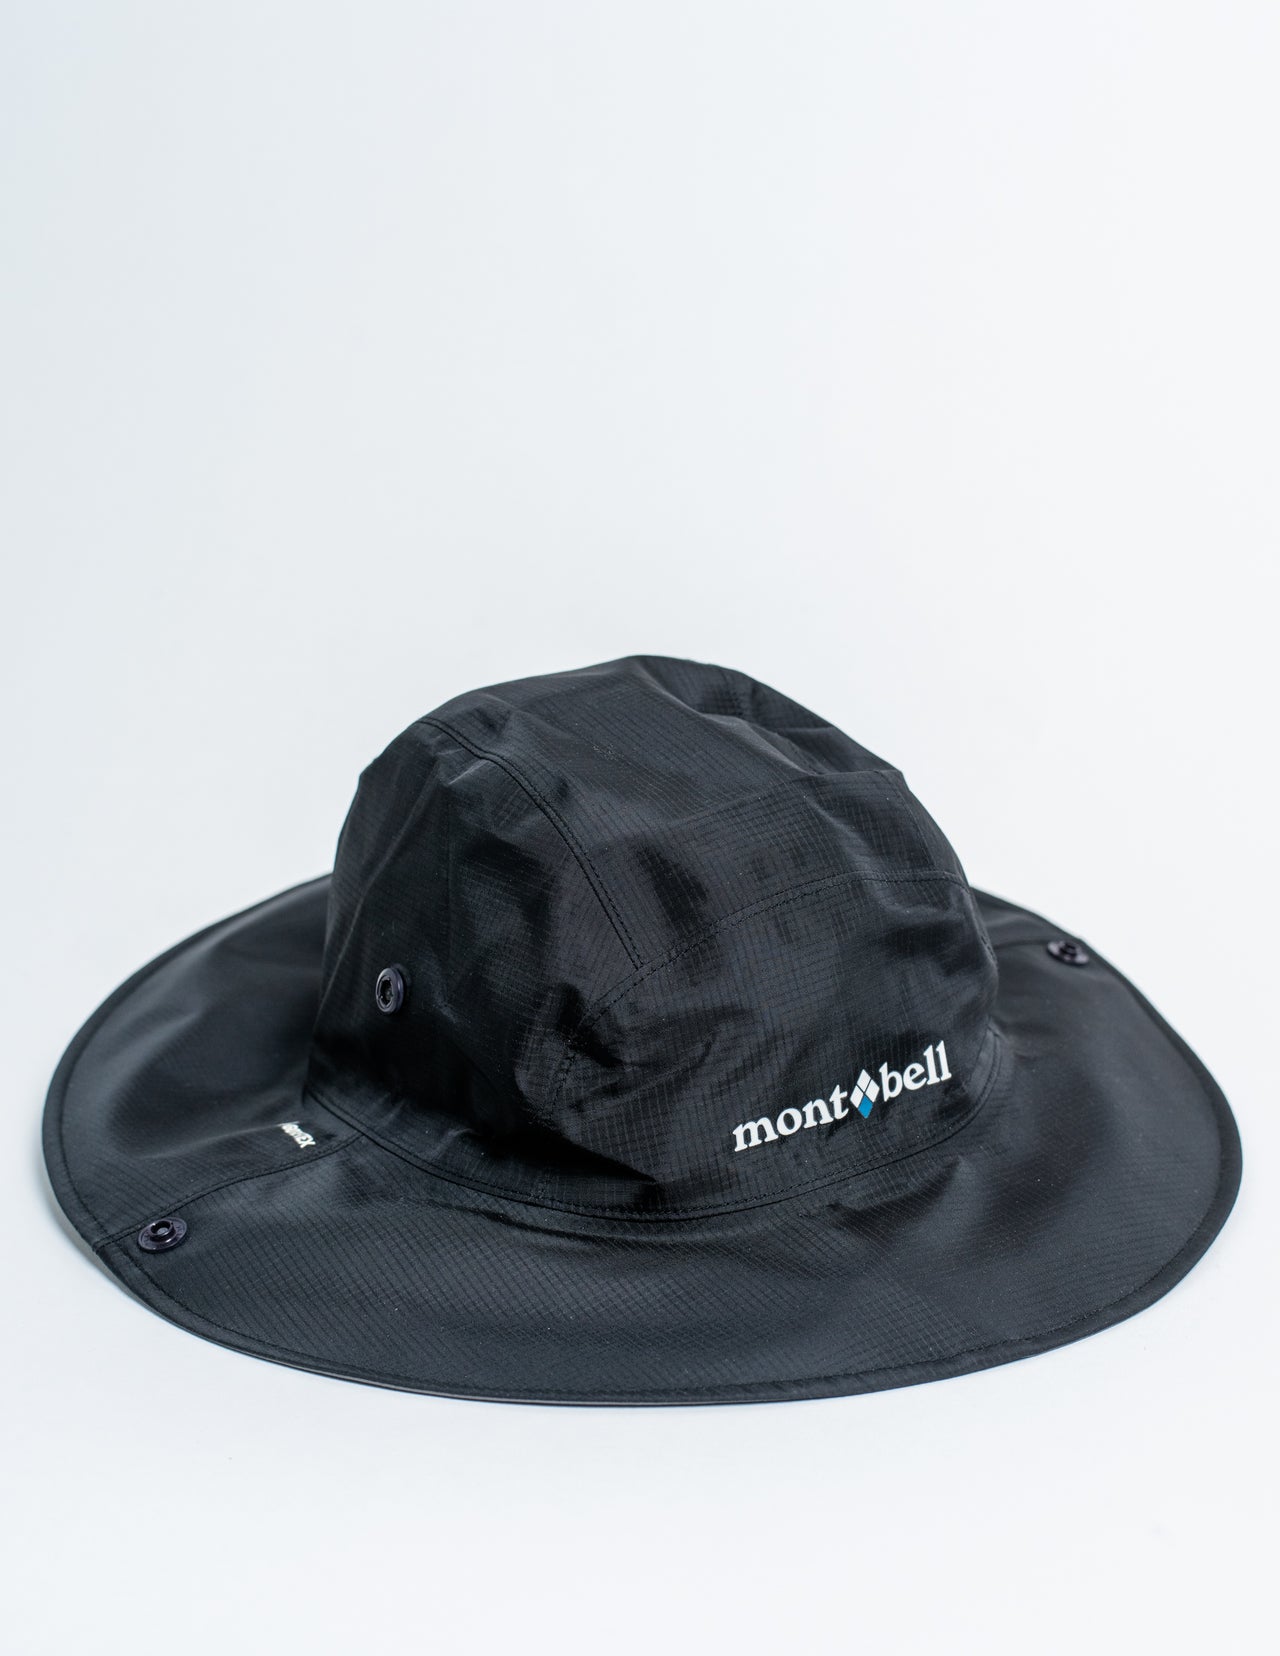 Gore-Tex Storm Hat in Black